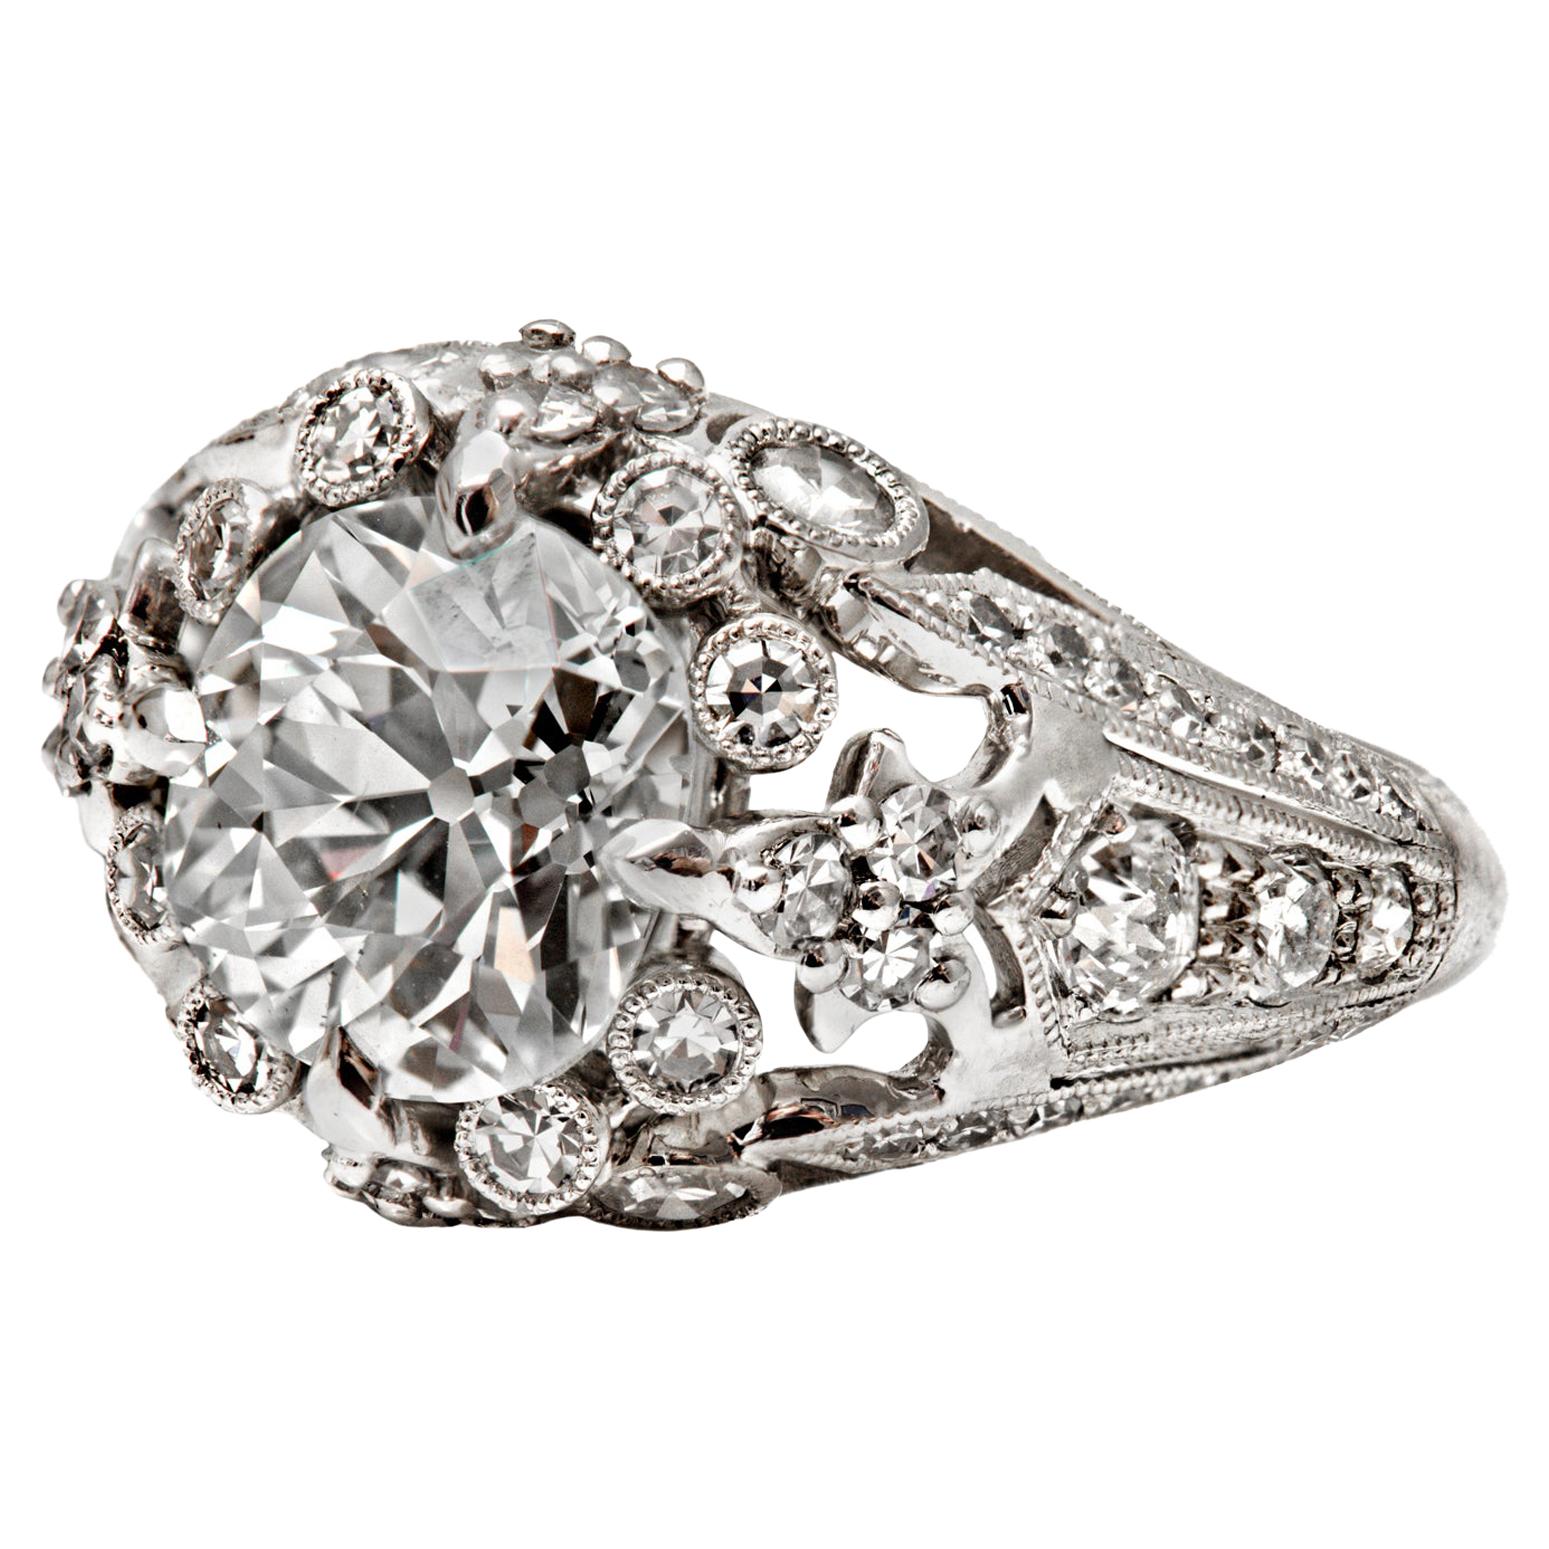 Belle Époque Inspired Diamond and Platinum Ring